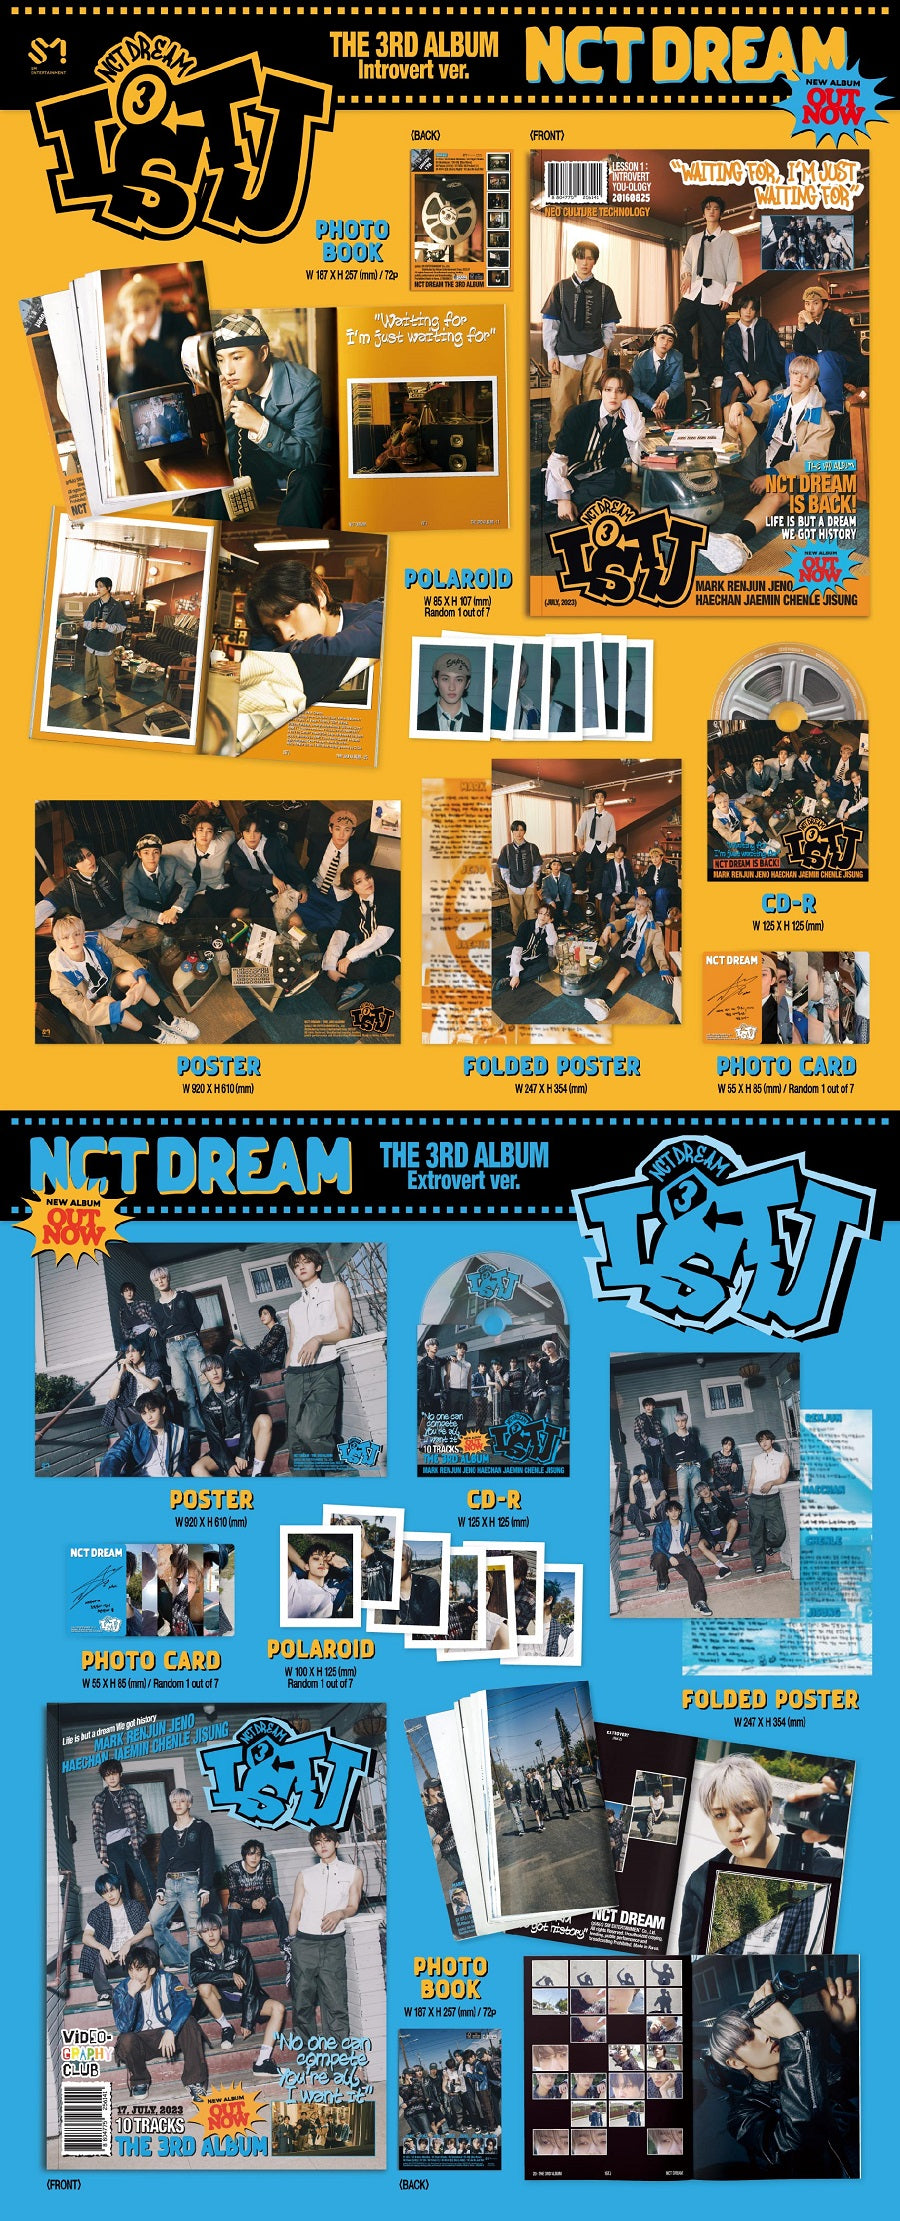 NCT Dream Vol. 3 - ISTJ (Photobook Version) (Random Version)